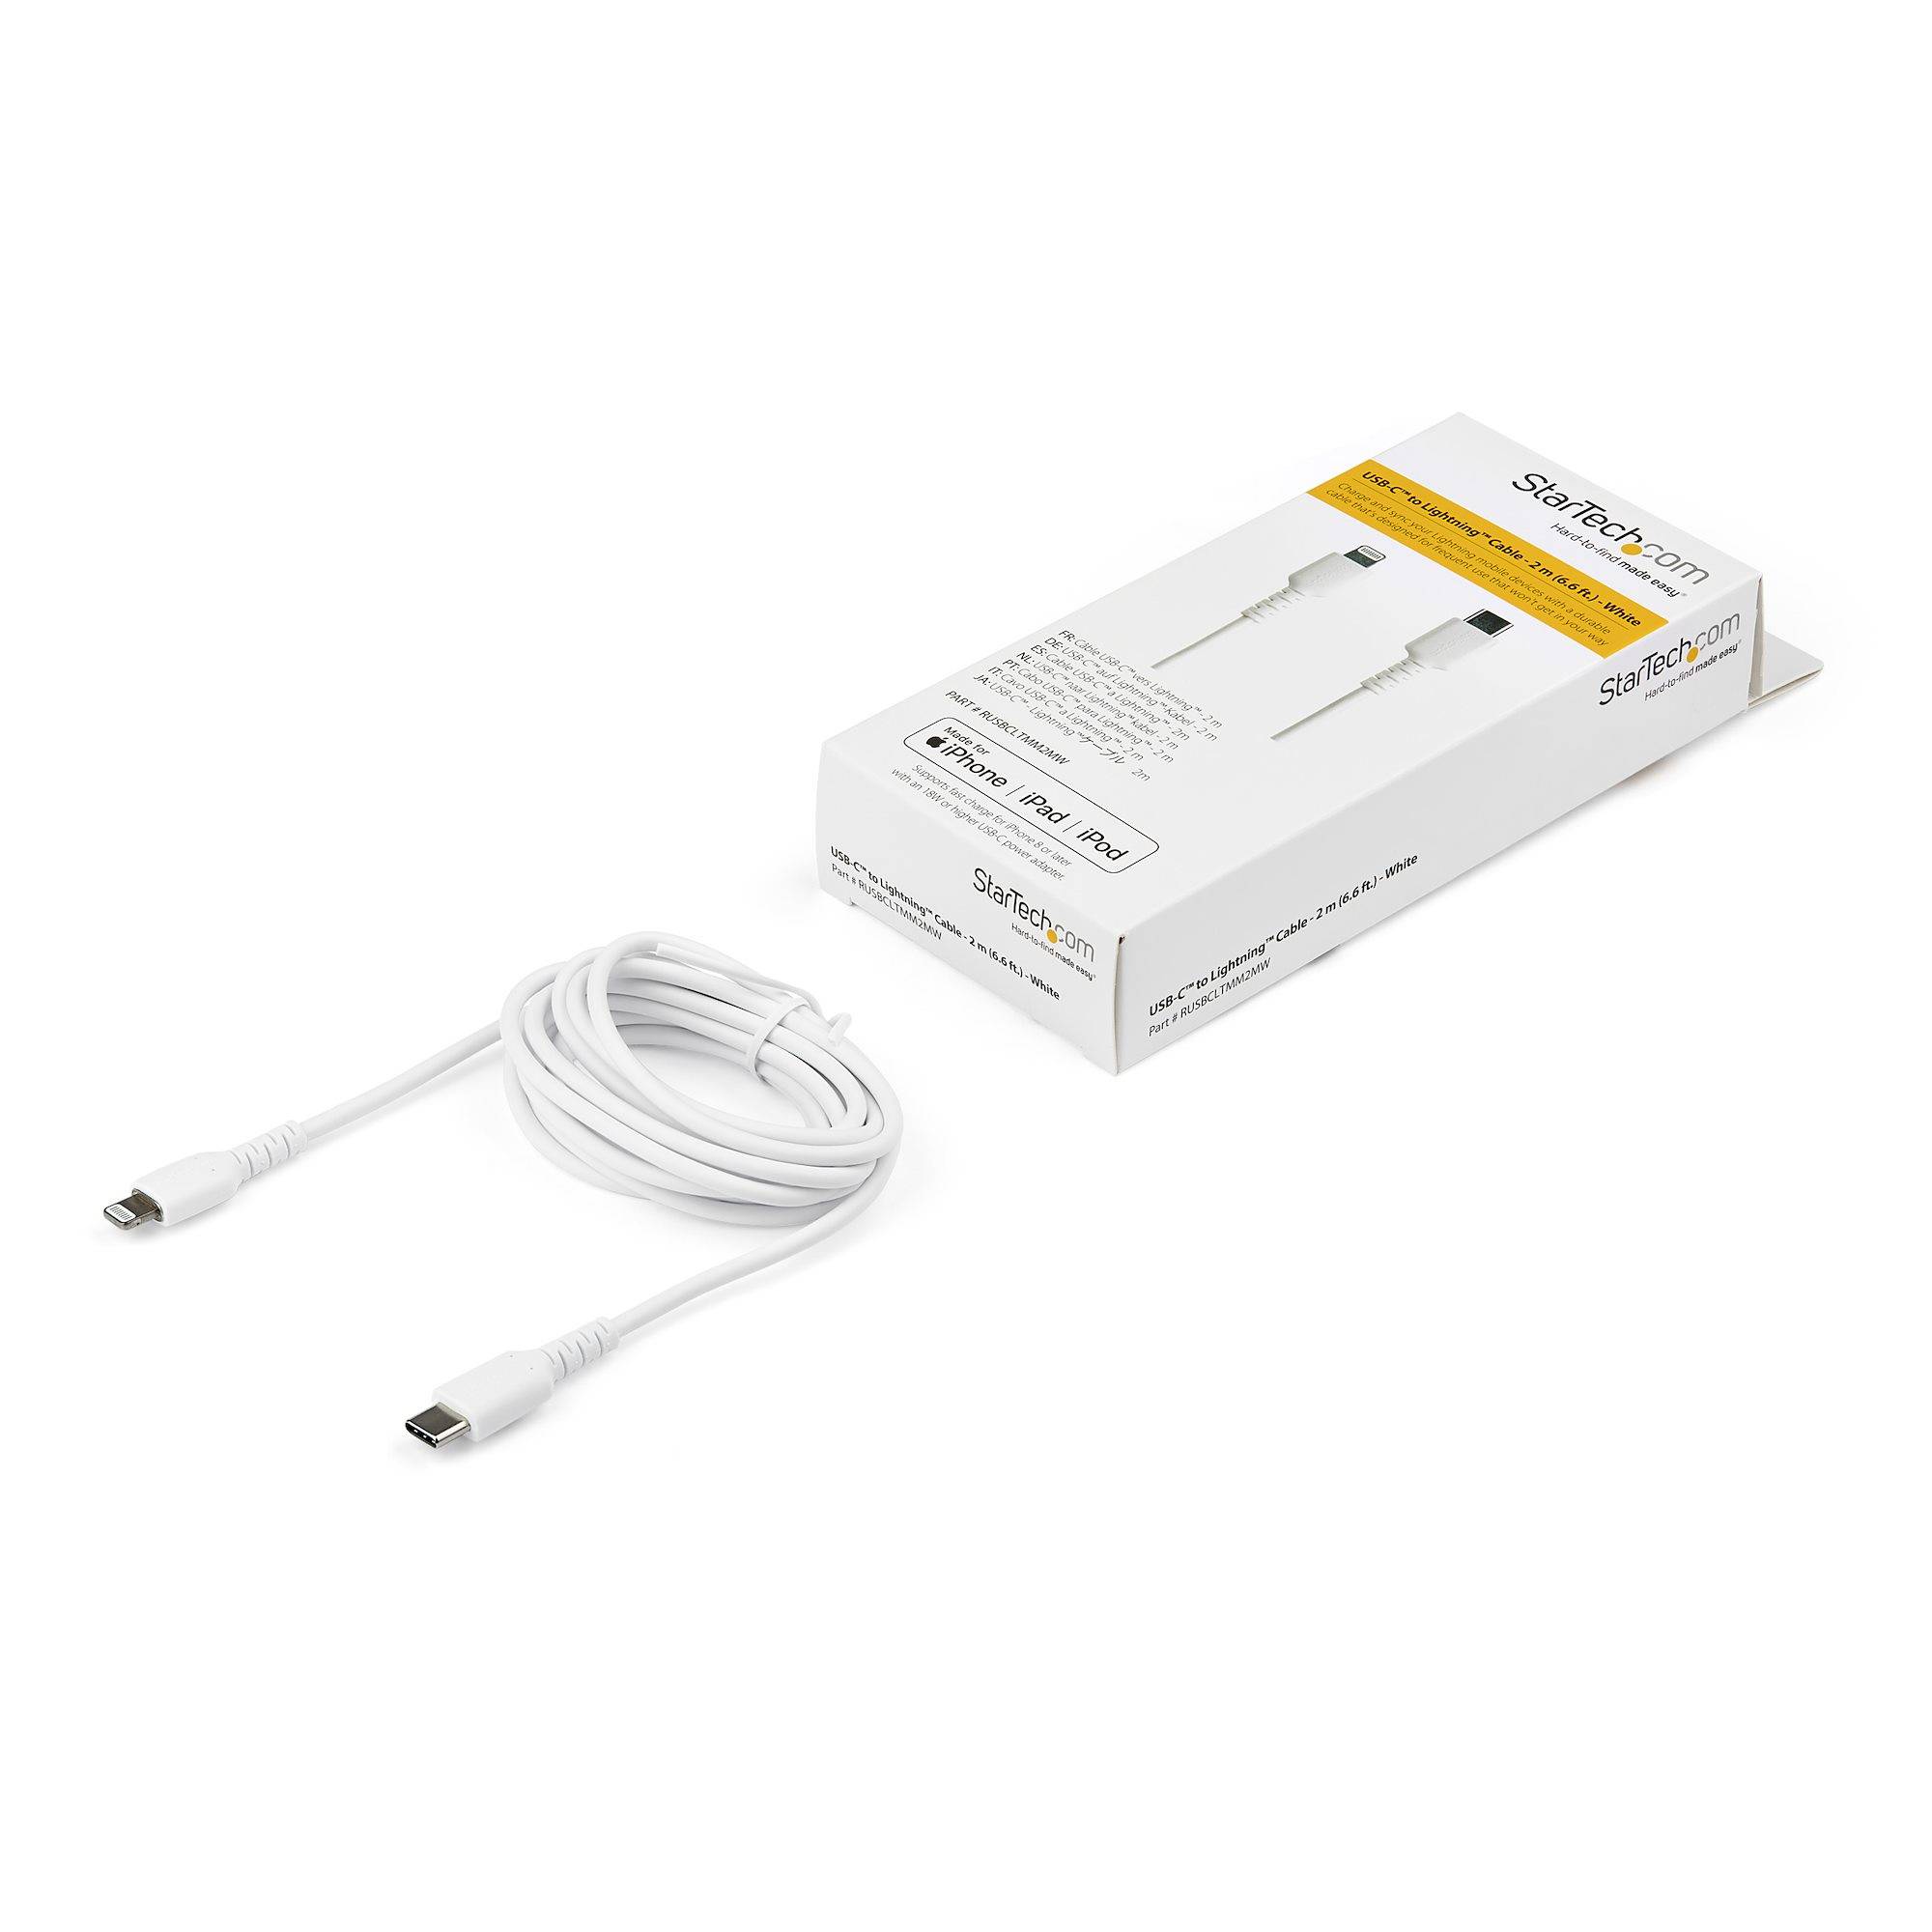 Rca Informatique - image du produit : 2M USB C TO LIGHTNING CABLE WHITE - ARAMID FIBER